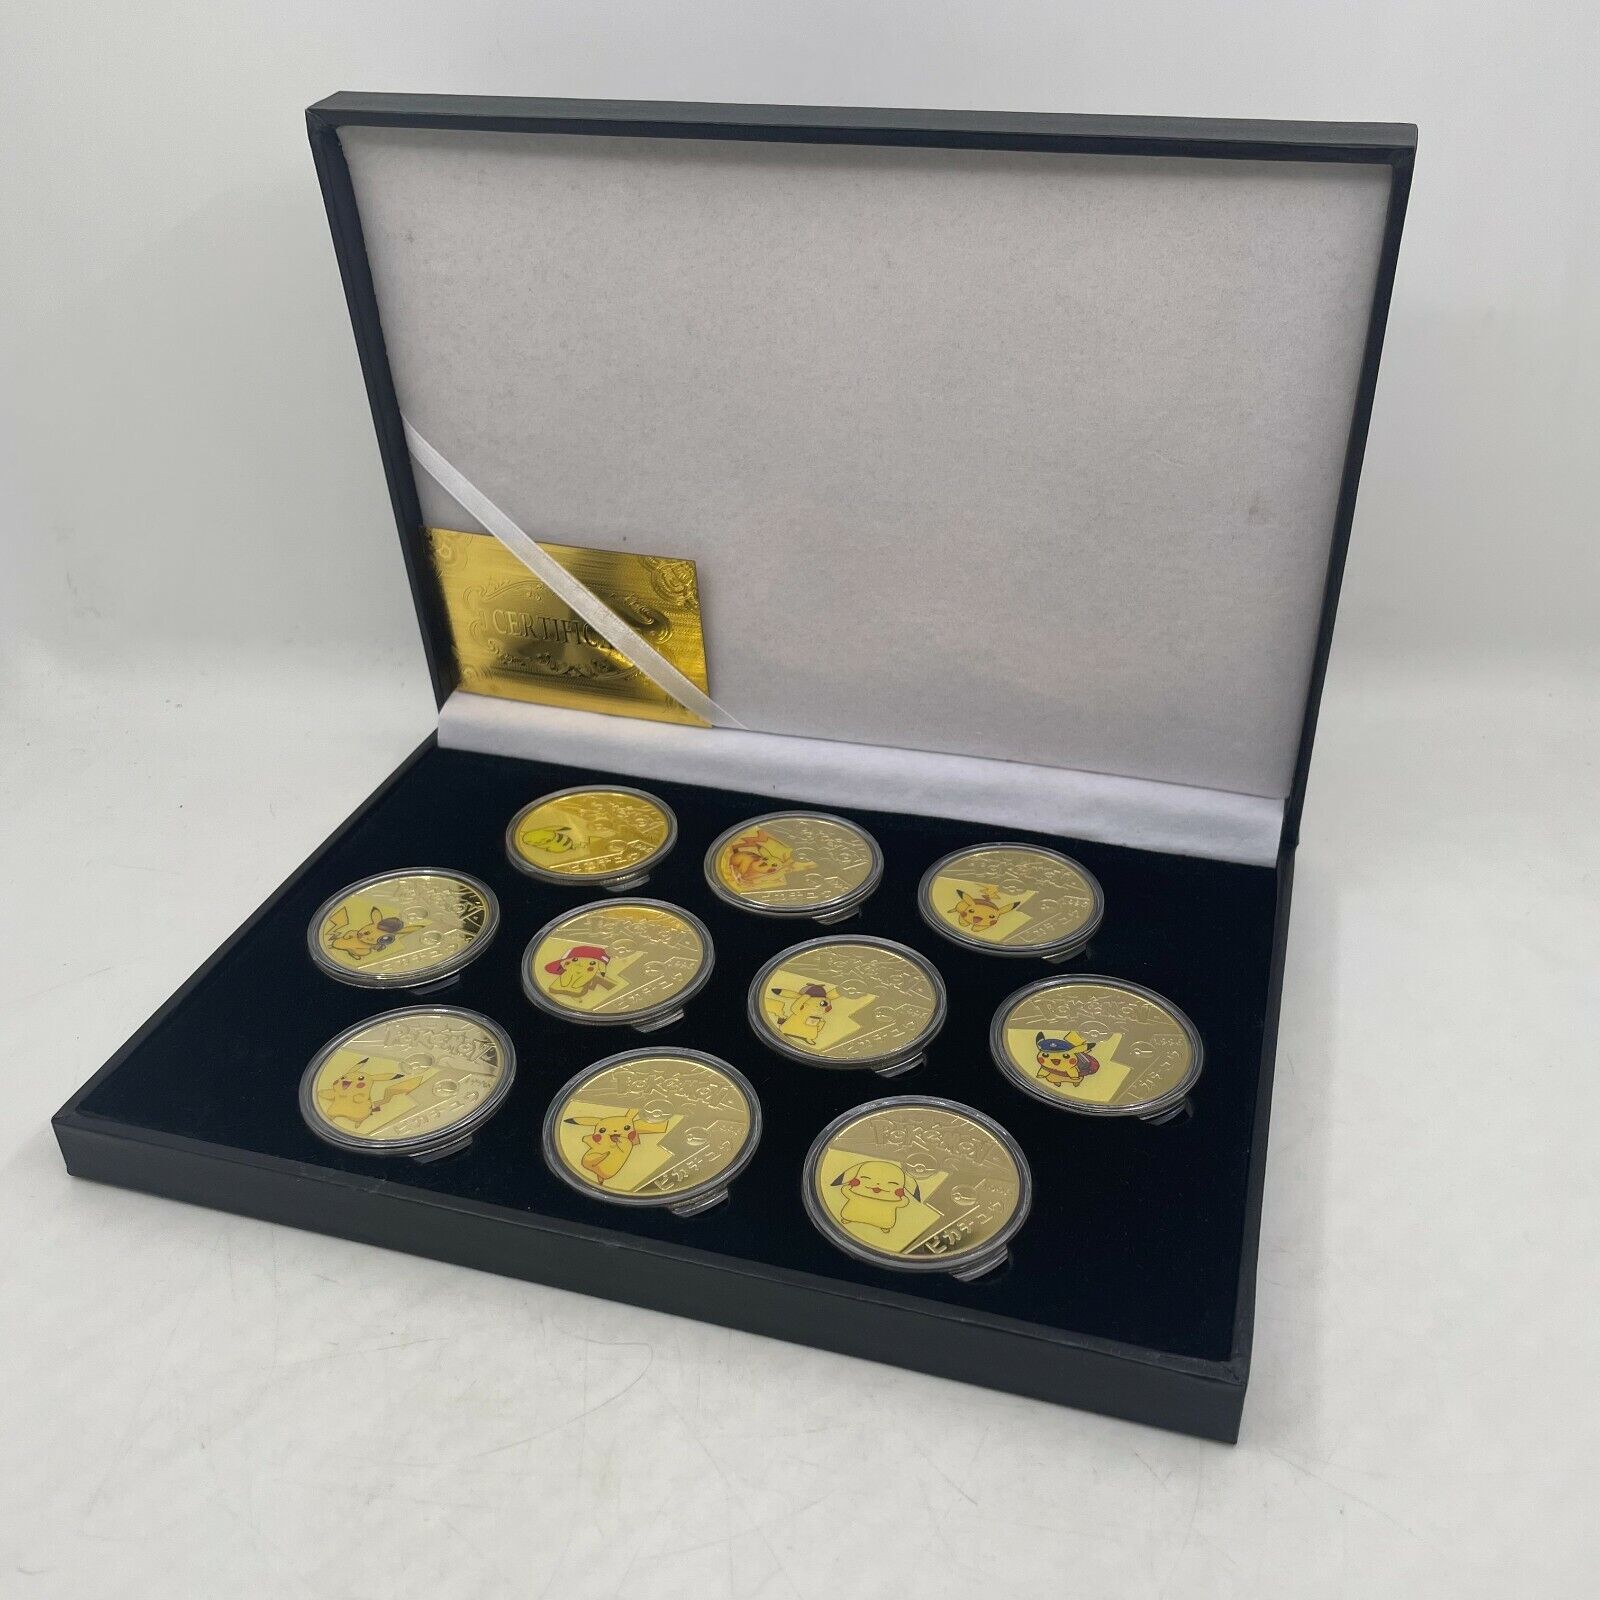 10pcs Pokemon Pikachu Coin Japan Anime Gold Commemorative Coin in box Kelin